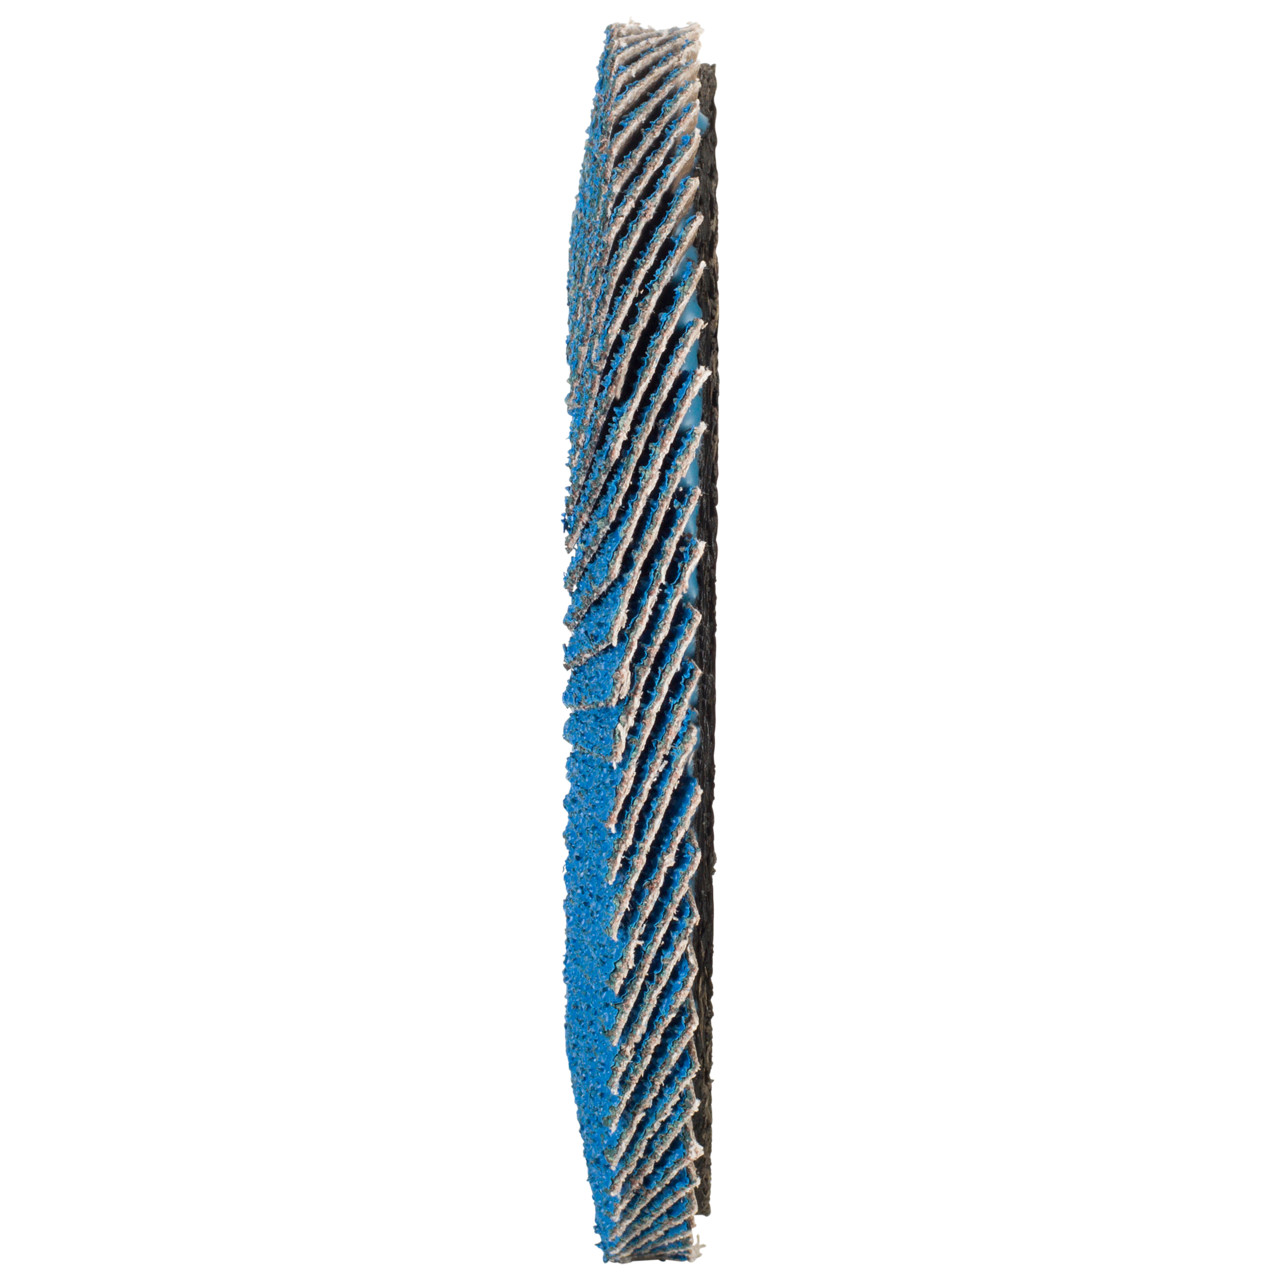 TYROLIT Fächerscheibe DxH 125x22,2 FASTCUT für Stahl & Edelstahl, P80, Form: 27A - gekröpfte Ausführung (Glasfaserträgerkörperausführung), Art. 160244